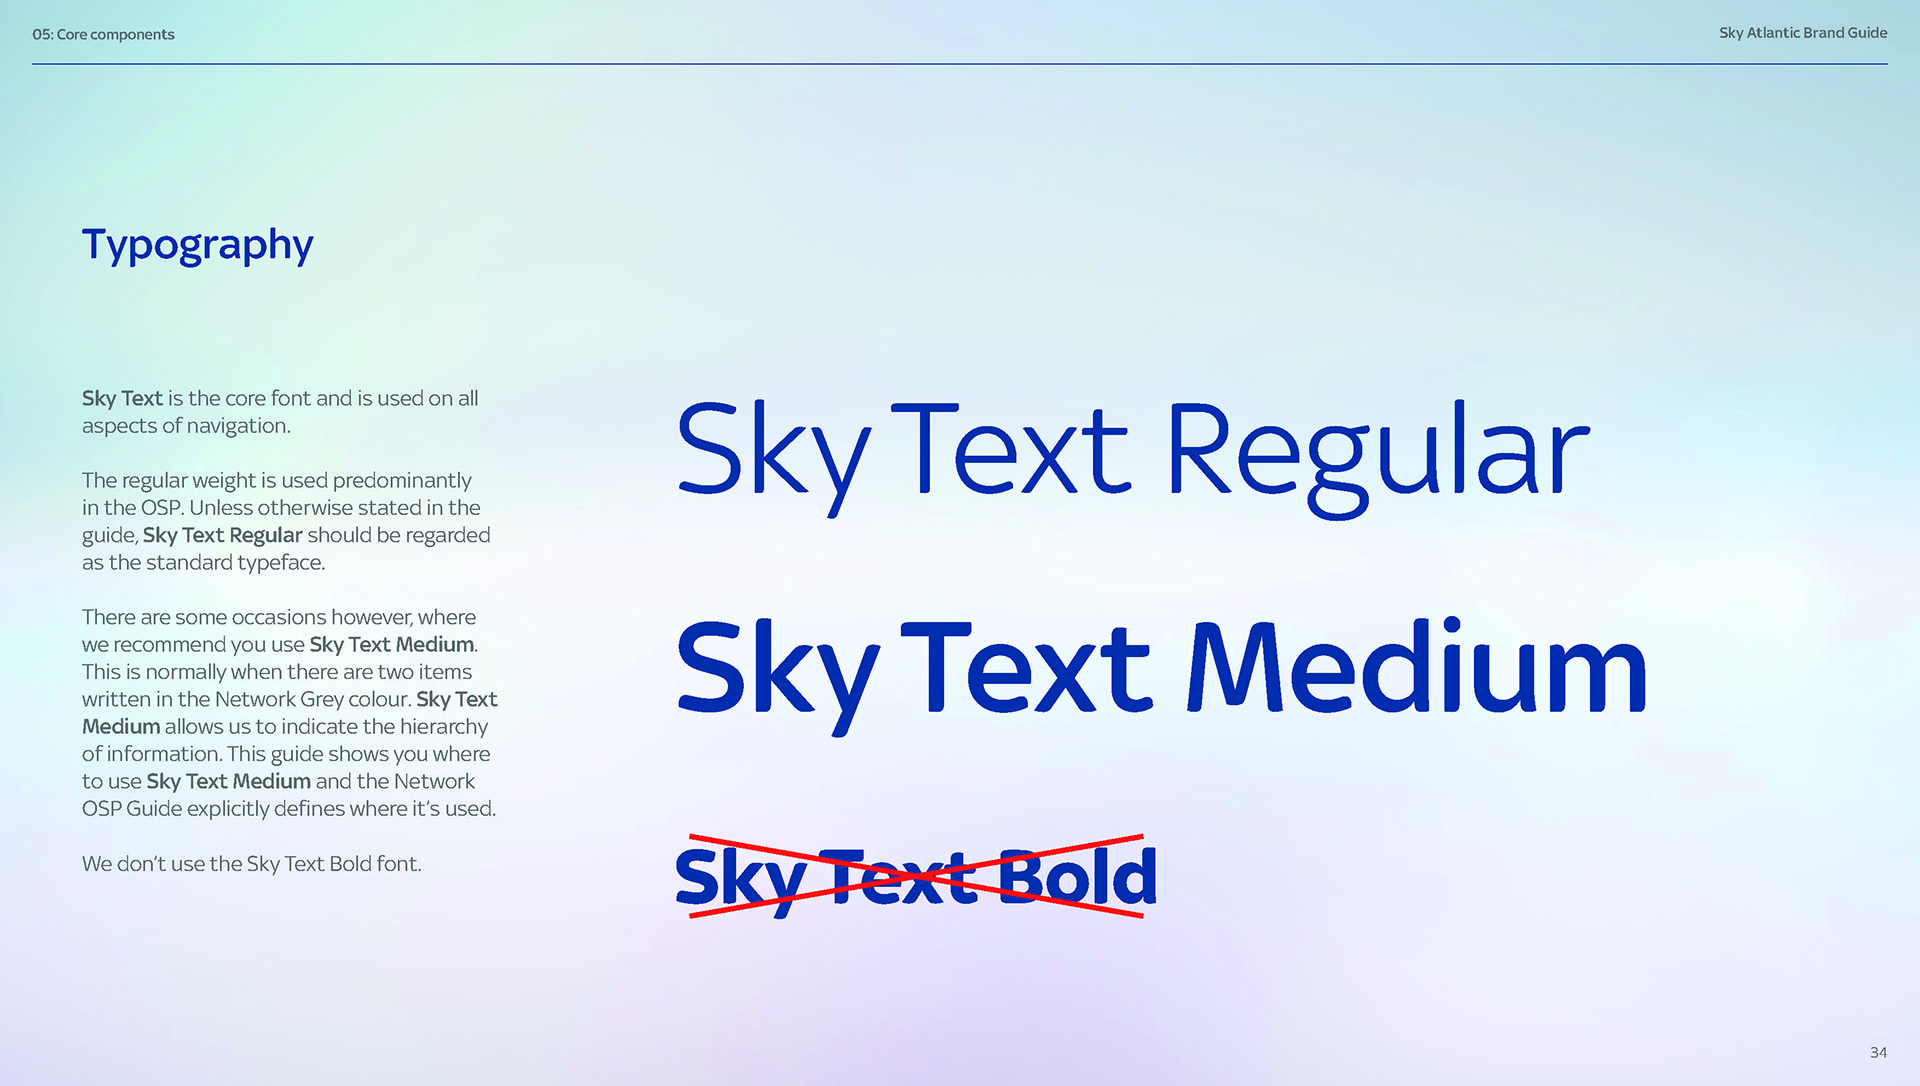 Sky_Atlantic_Brand_Guide_09_06_2016_Page_34.jpg